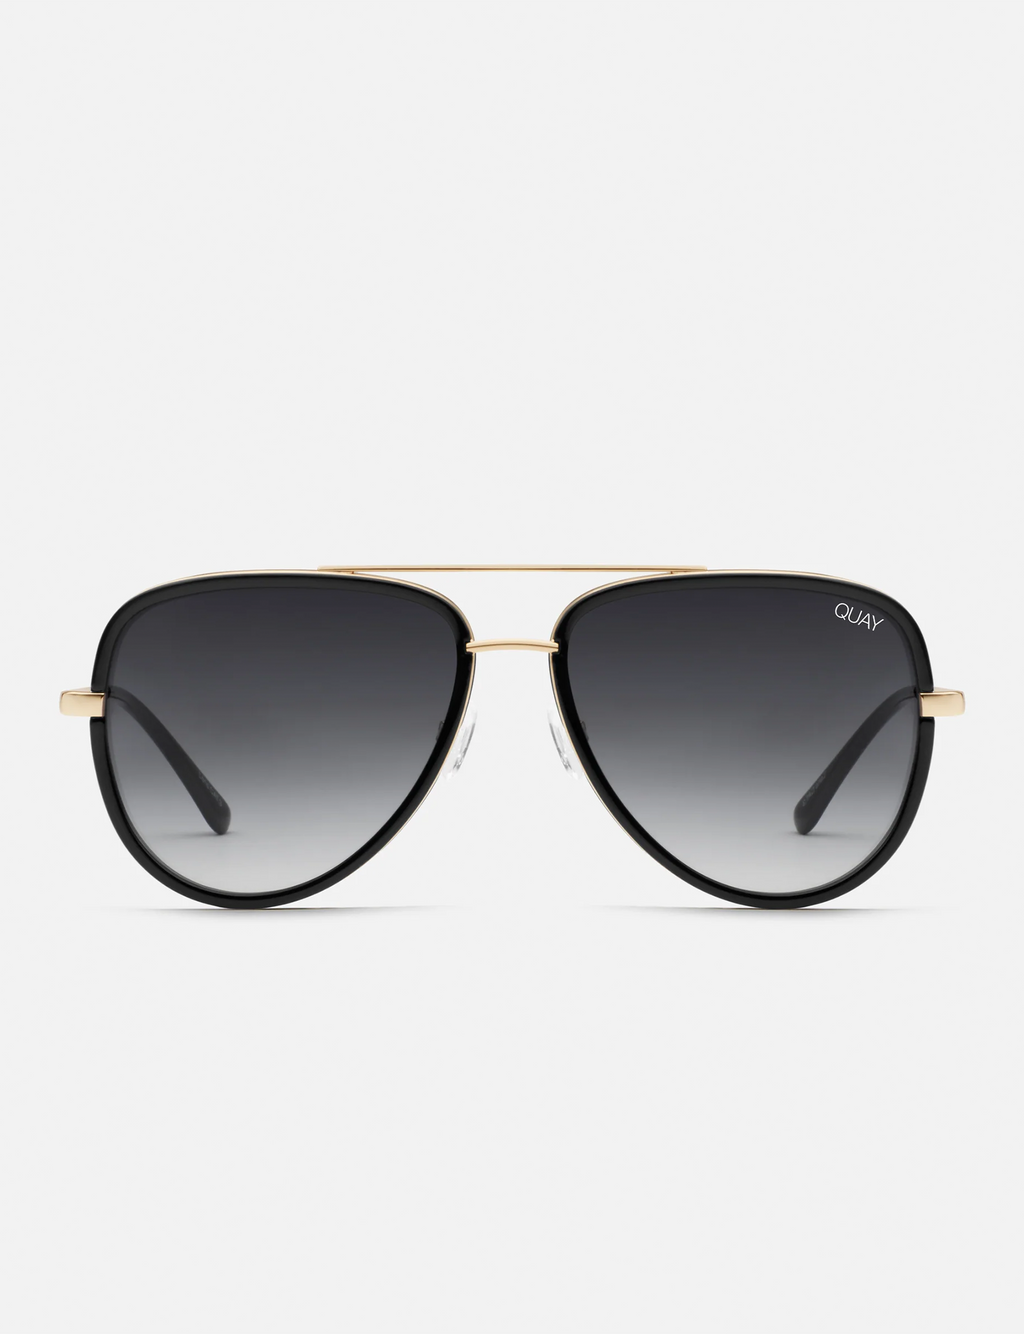 All In Polarized Sunglasses, Black/Smoke